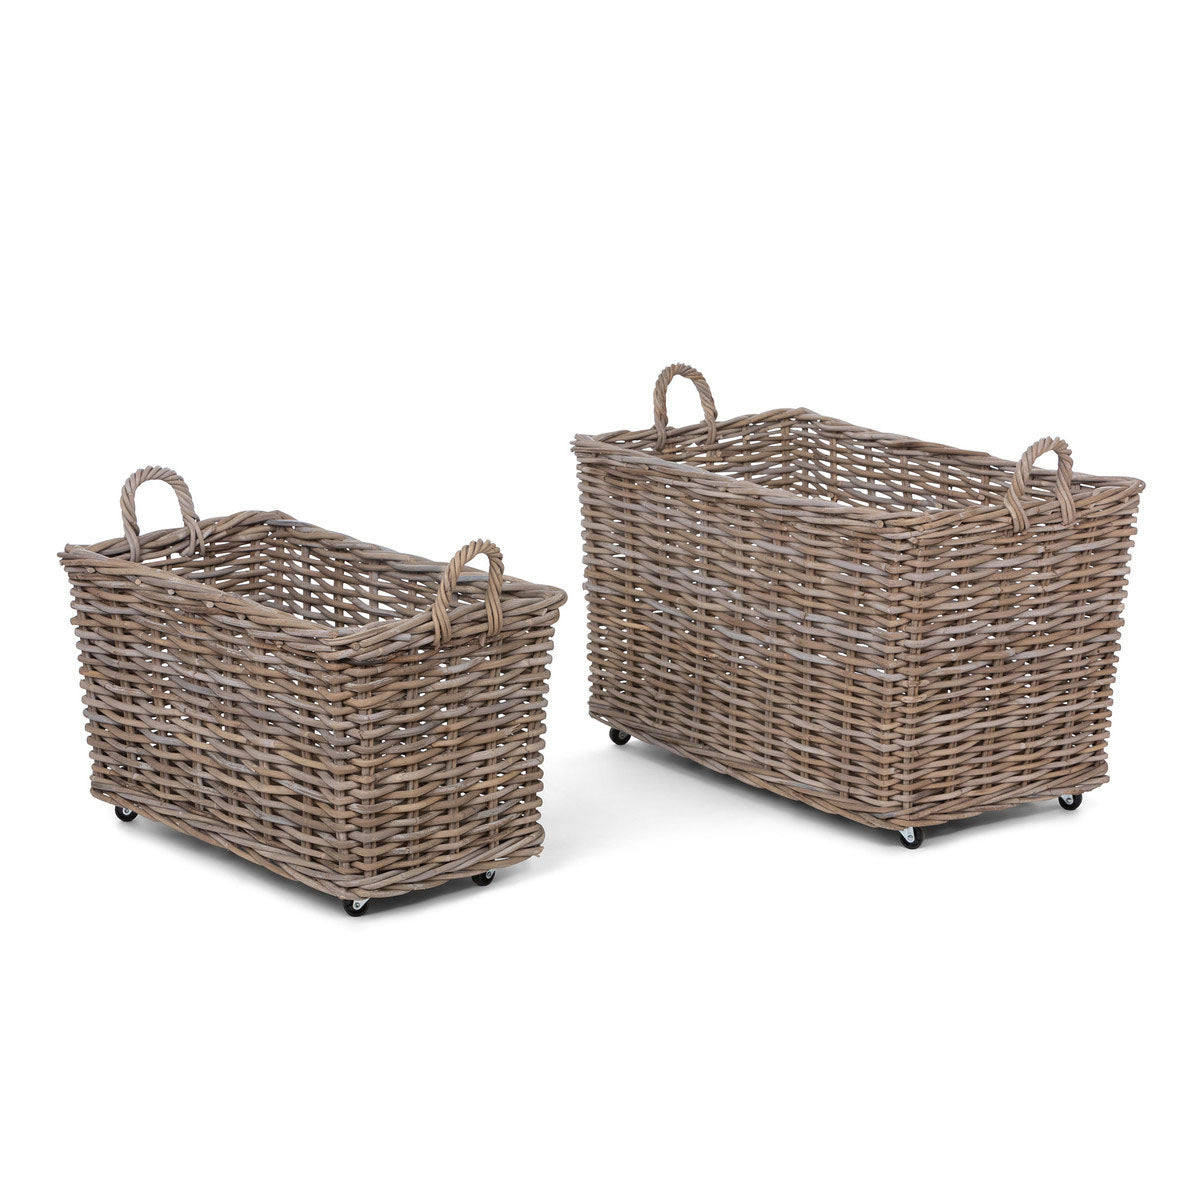 Set of 2 Oversized Rattan Baskets on Castors - More Coming Soon!